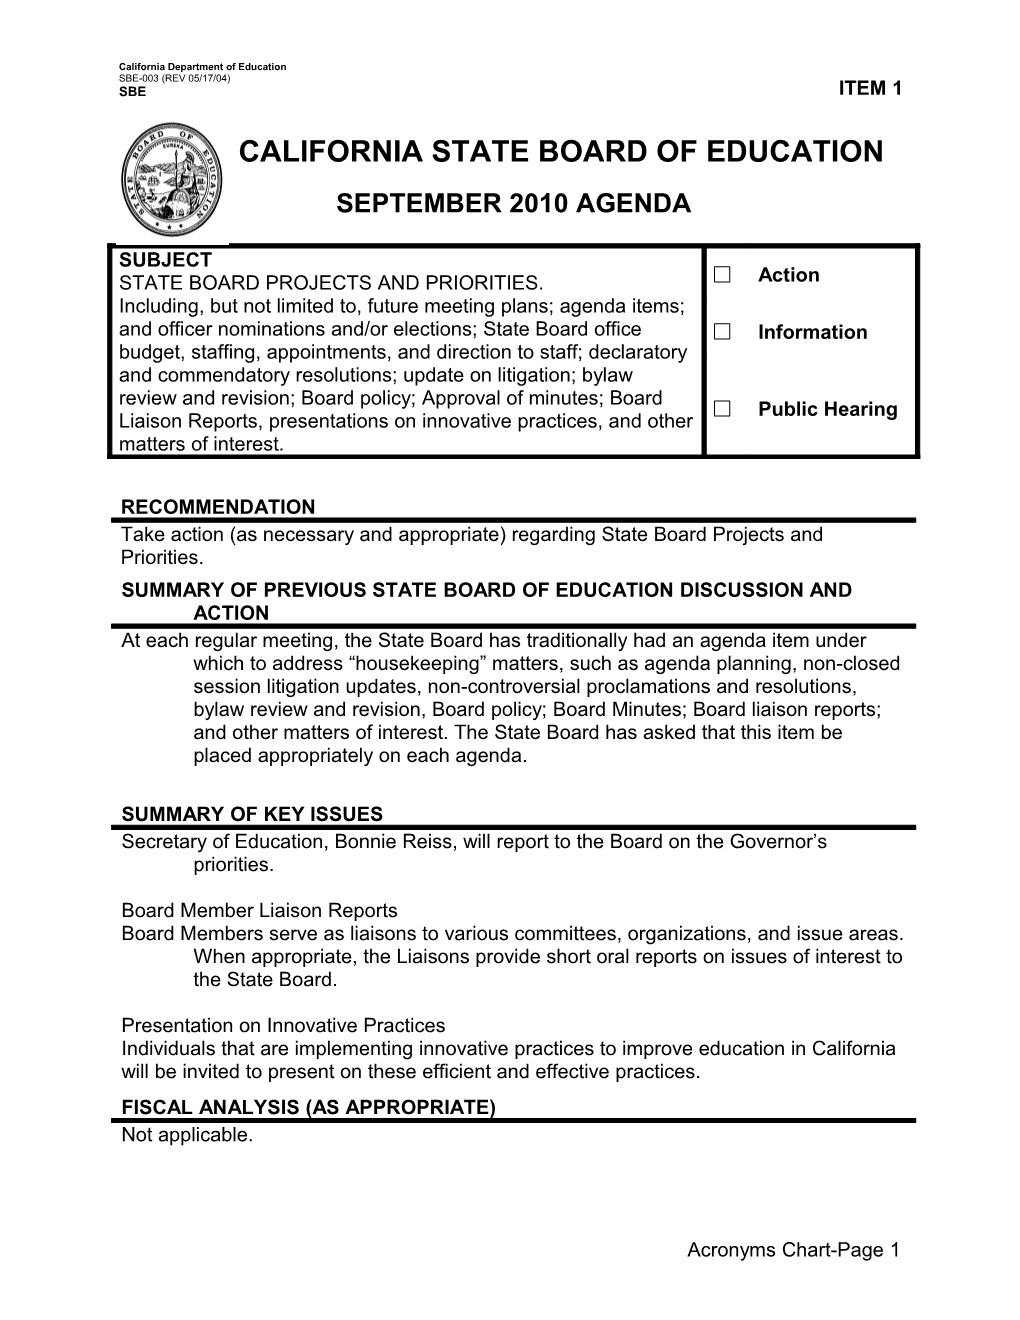 September 2010 Agenda Item 01 - Meeting Agendas (CA State Board of Education)